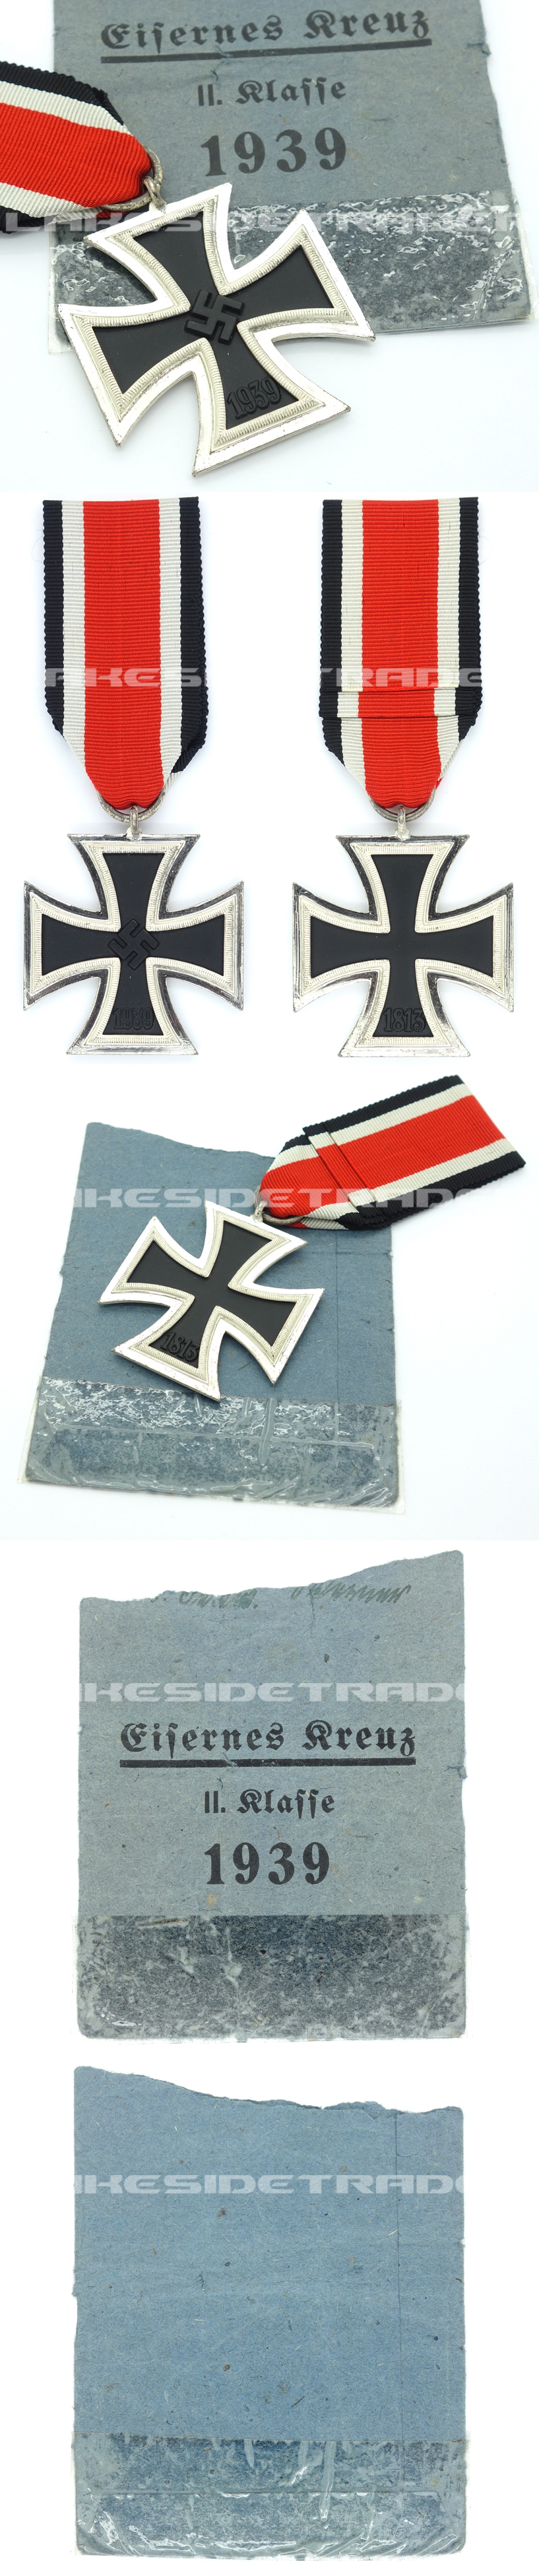 Issue Packet - 2nd Class Iron Cross by Wachtler & Lange